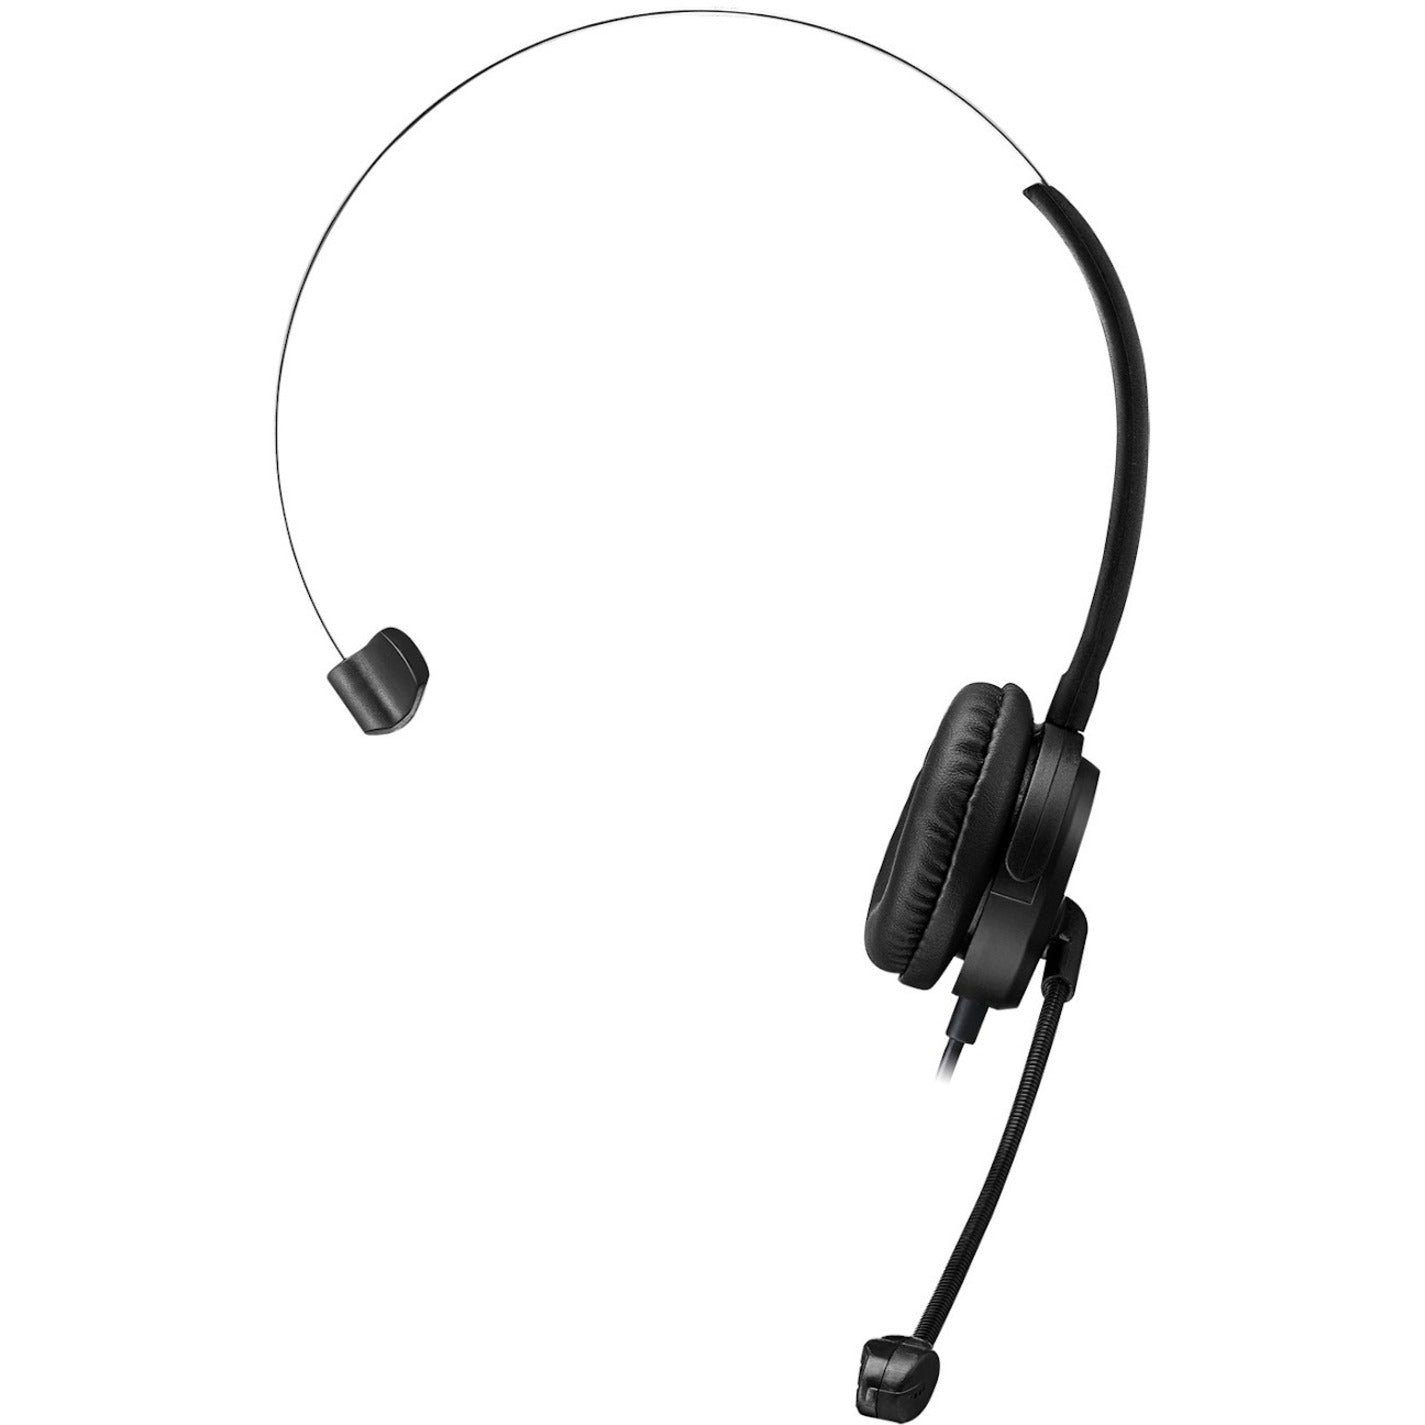 Adesso XTREAM P1 USB 单侧头戴式耳机与可调麦克风，有线单声道耳机 品牌：Adesso 品牌名称翻译：雅迪索